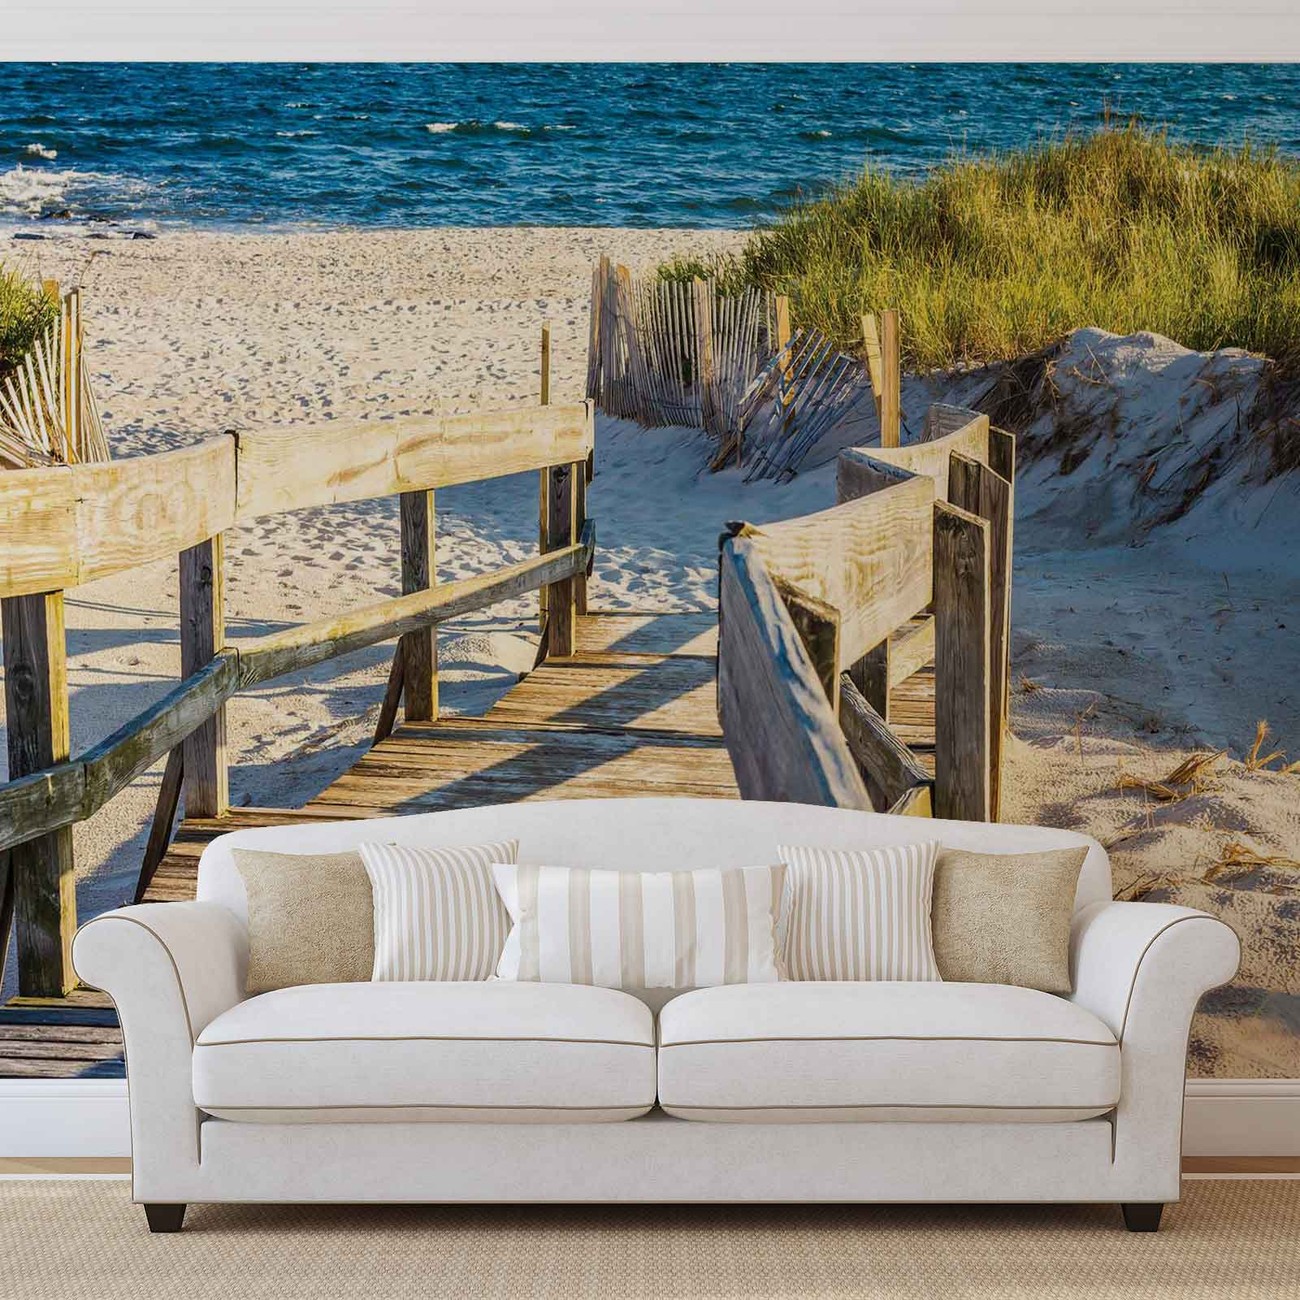 Malla fotomural muro fotomurales imagen imagen papel pintado 1214ve playa mar de arena